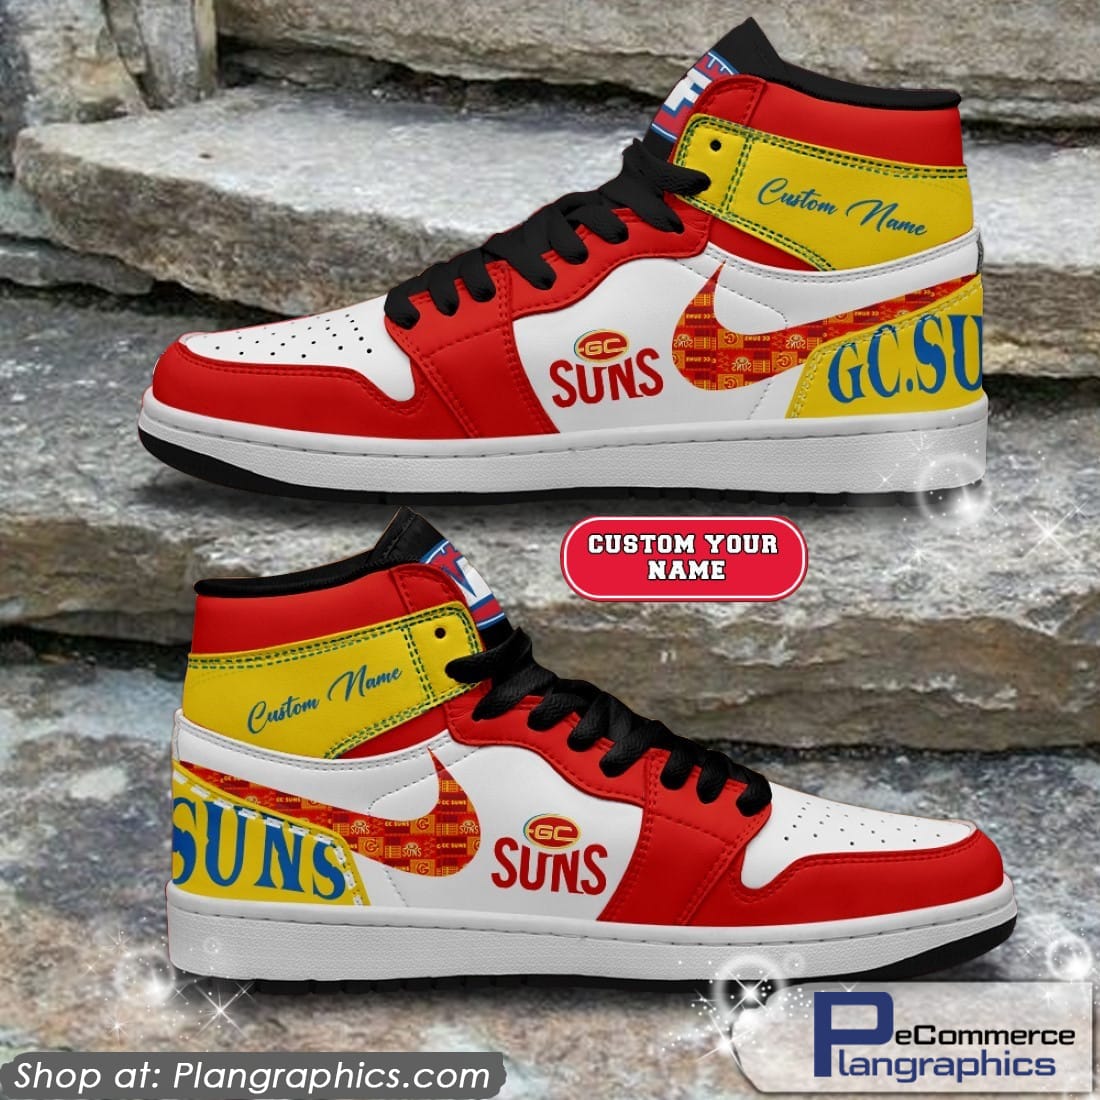 Gold Coast Suns Football Club AFL Personalized Air Jordan 1 Shoes